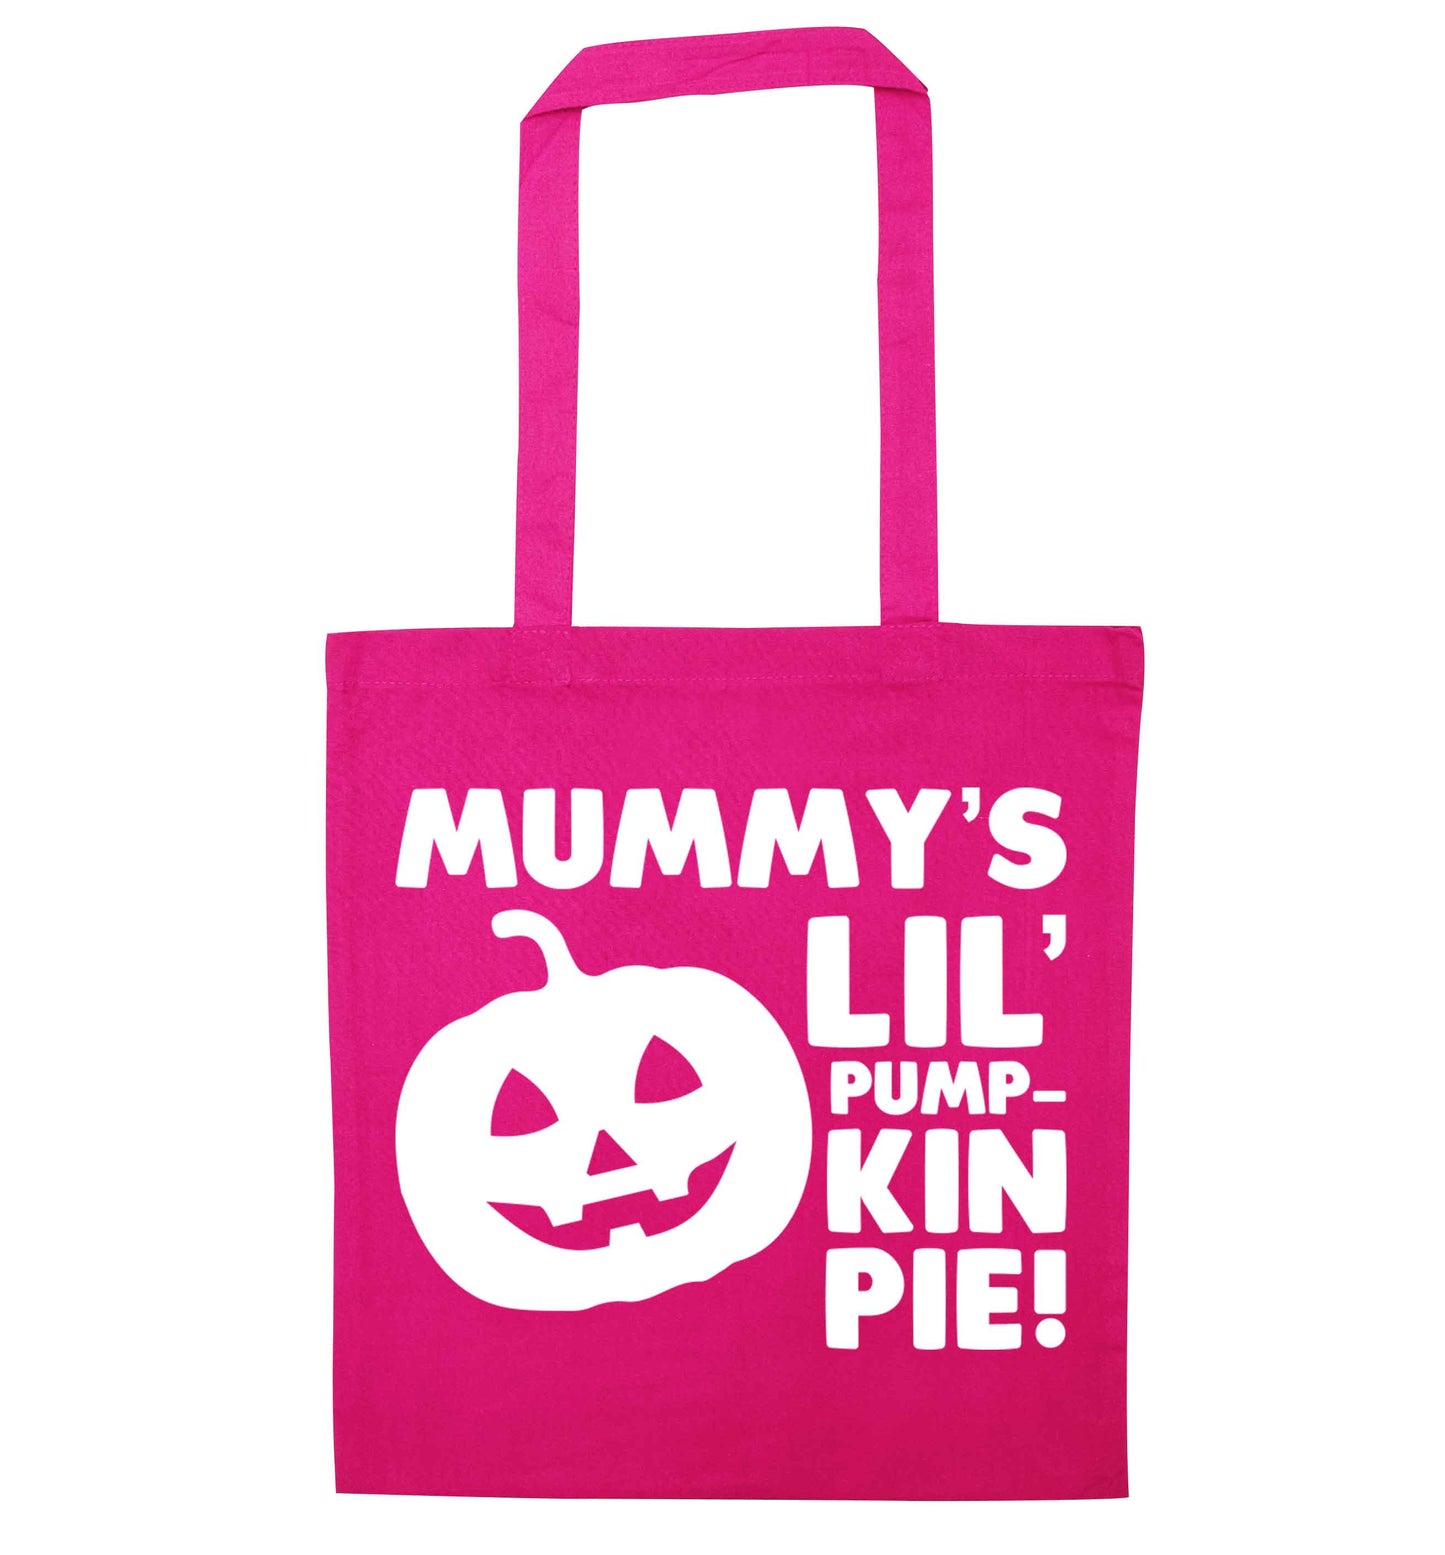 Mummy's lil' pumpkin pie pink tote bag